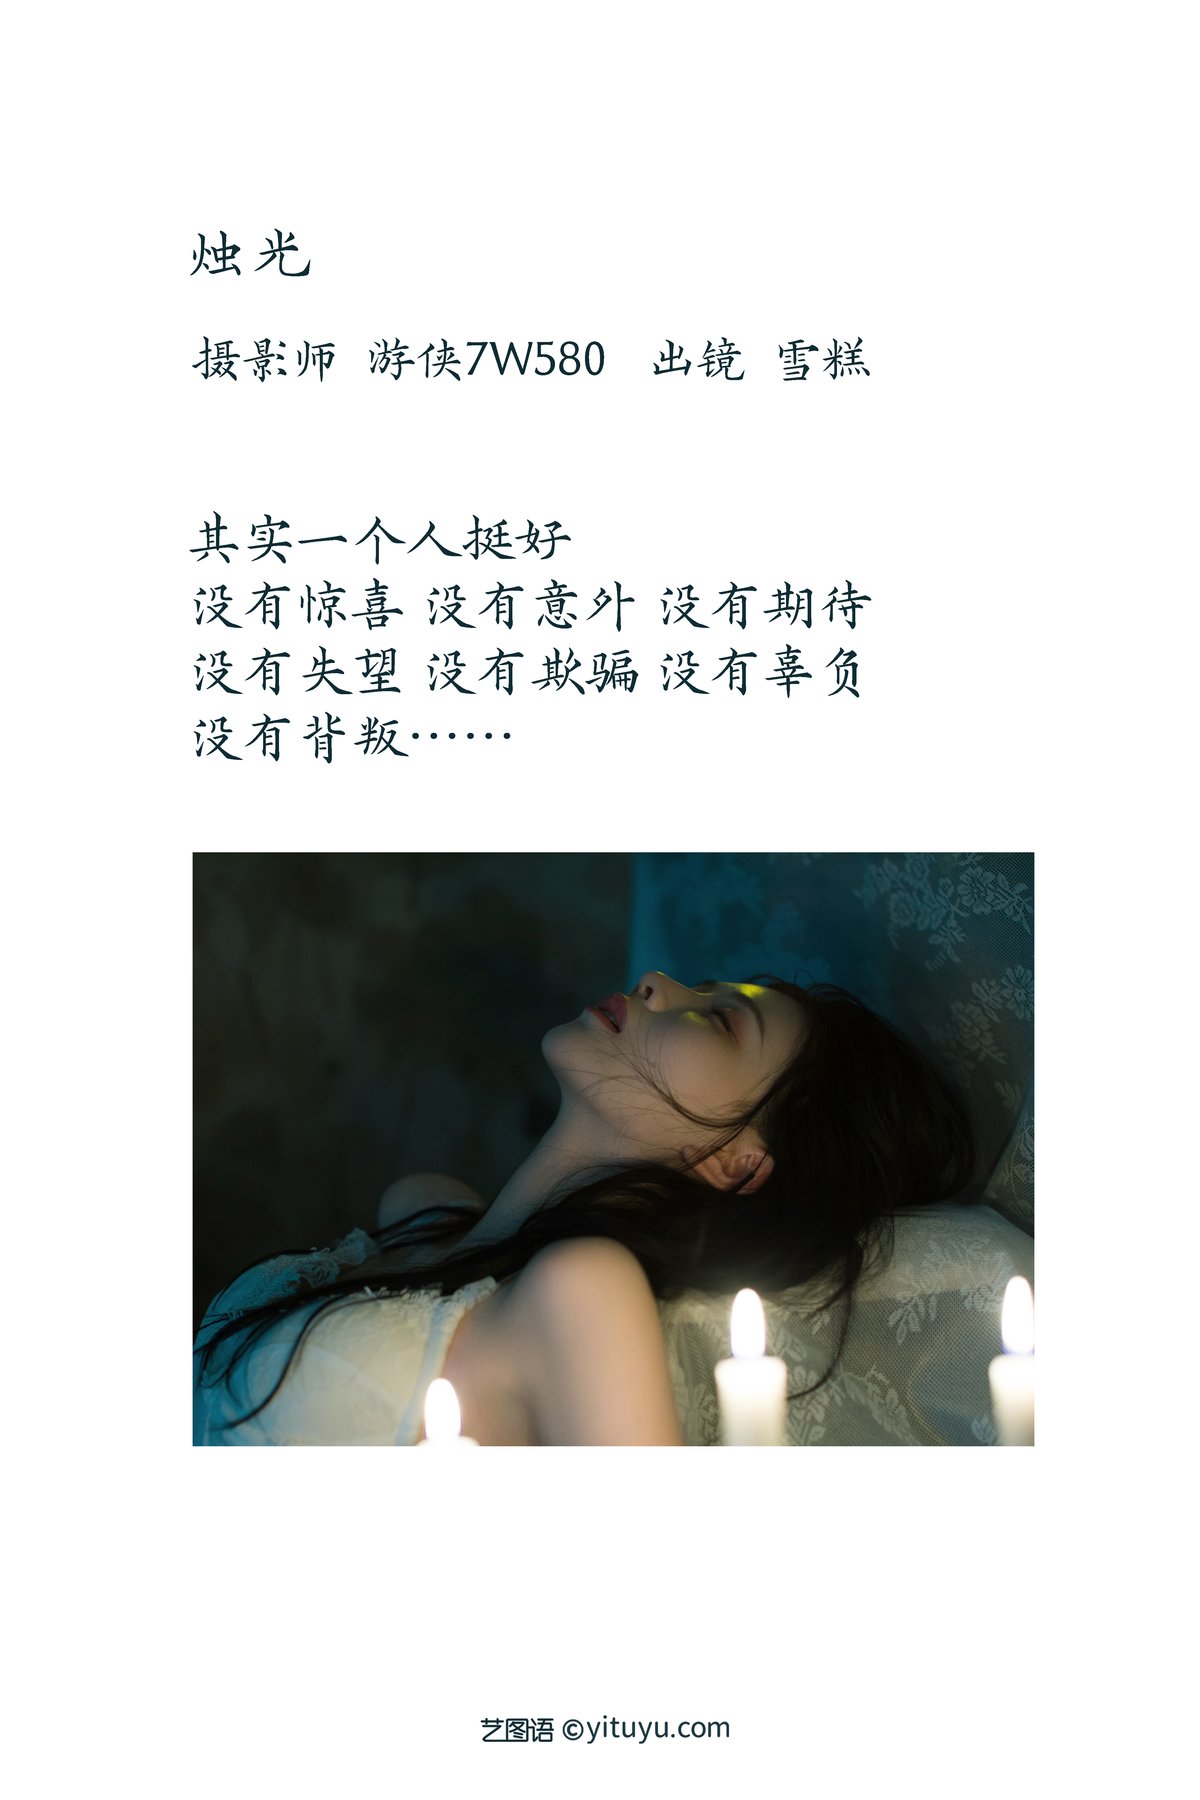 YiTuYu艺图语 Vol 3009 Xue Gao 0001 6824691290.jpg